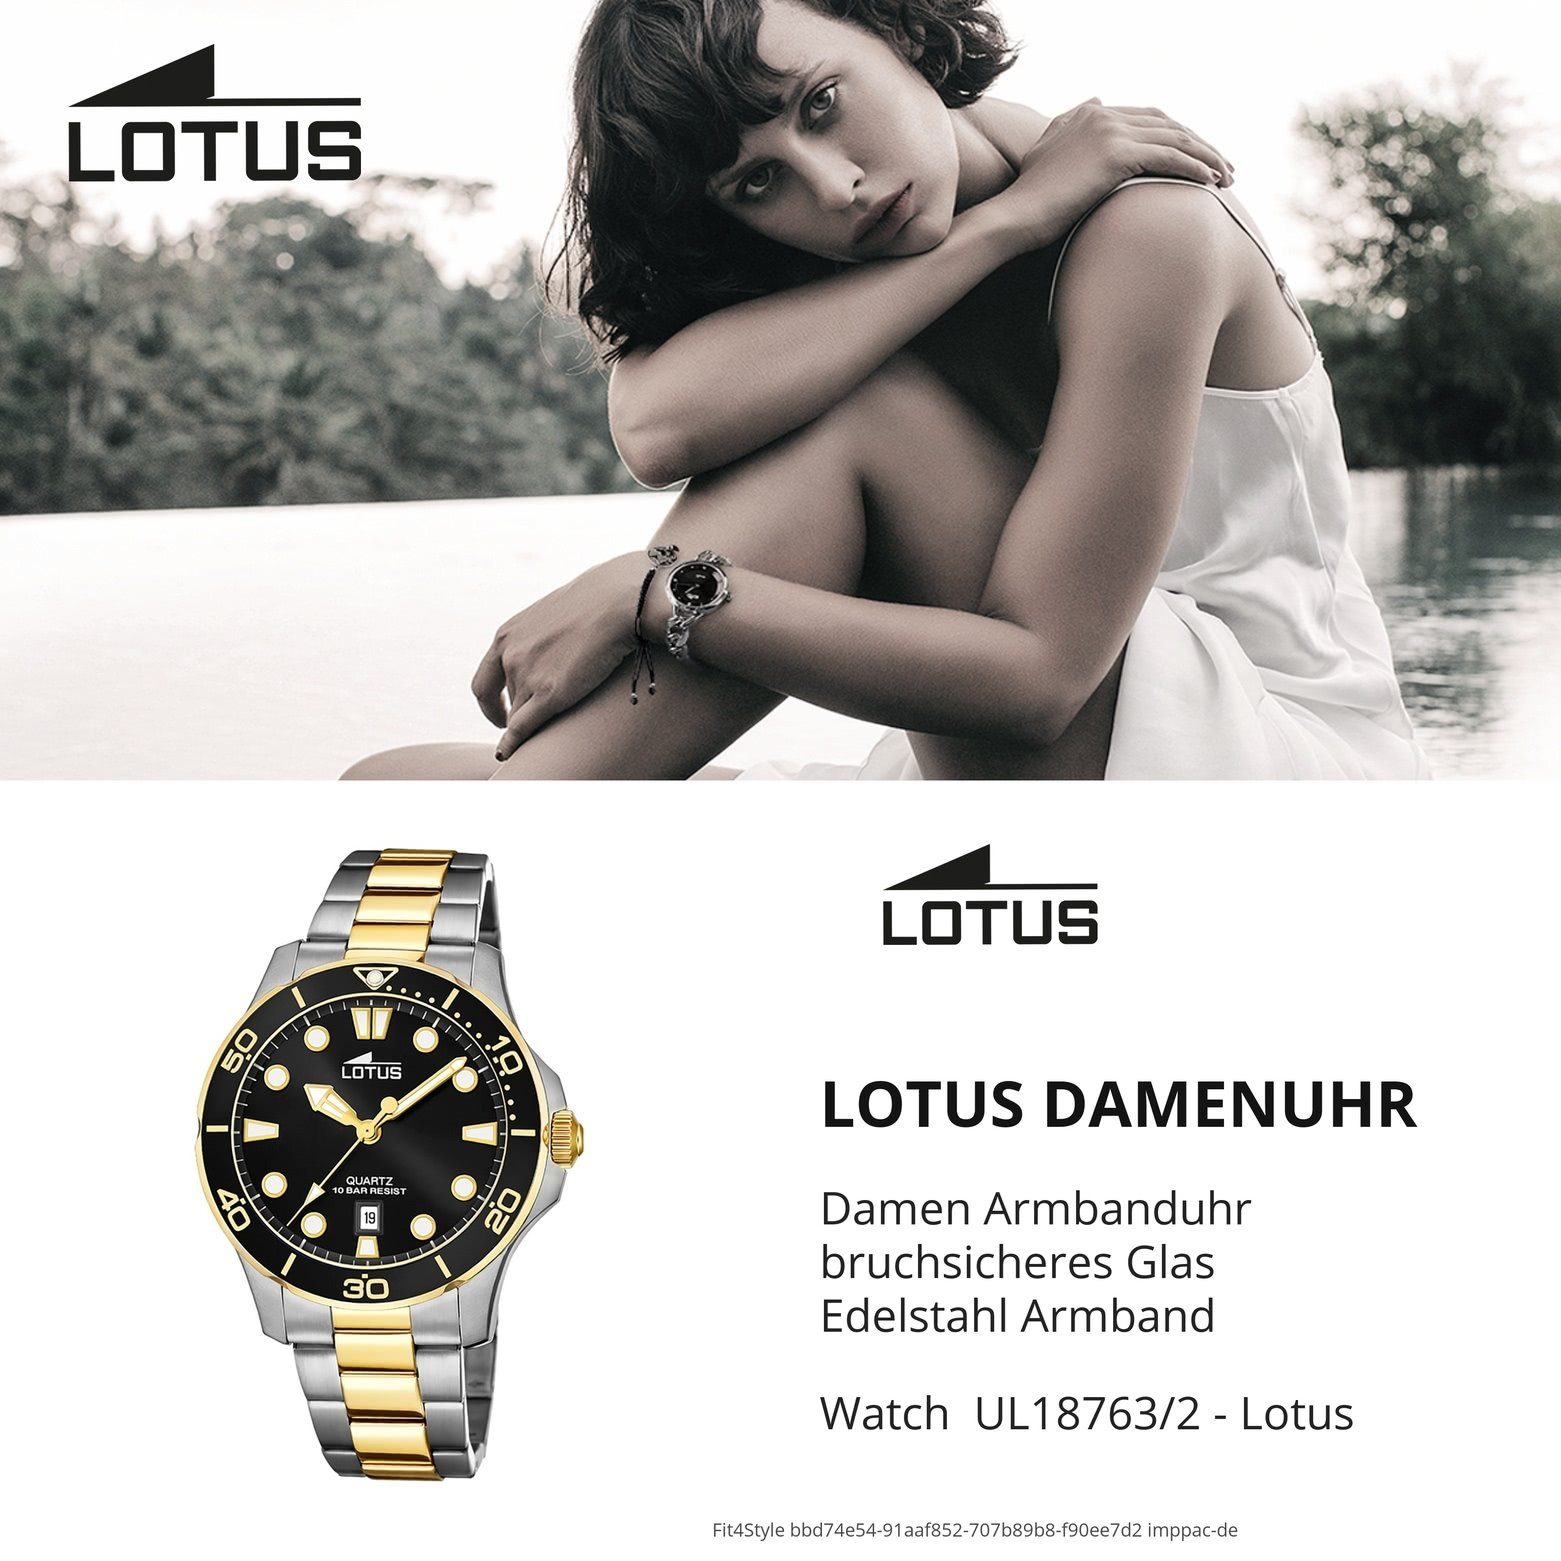 39mm) gold Sport silber, Lotus Quarzuhr Lotus rund, Damen Edelstahlarmband Armbanduhr 18763/2, mittel (ca. Damenuhr